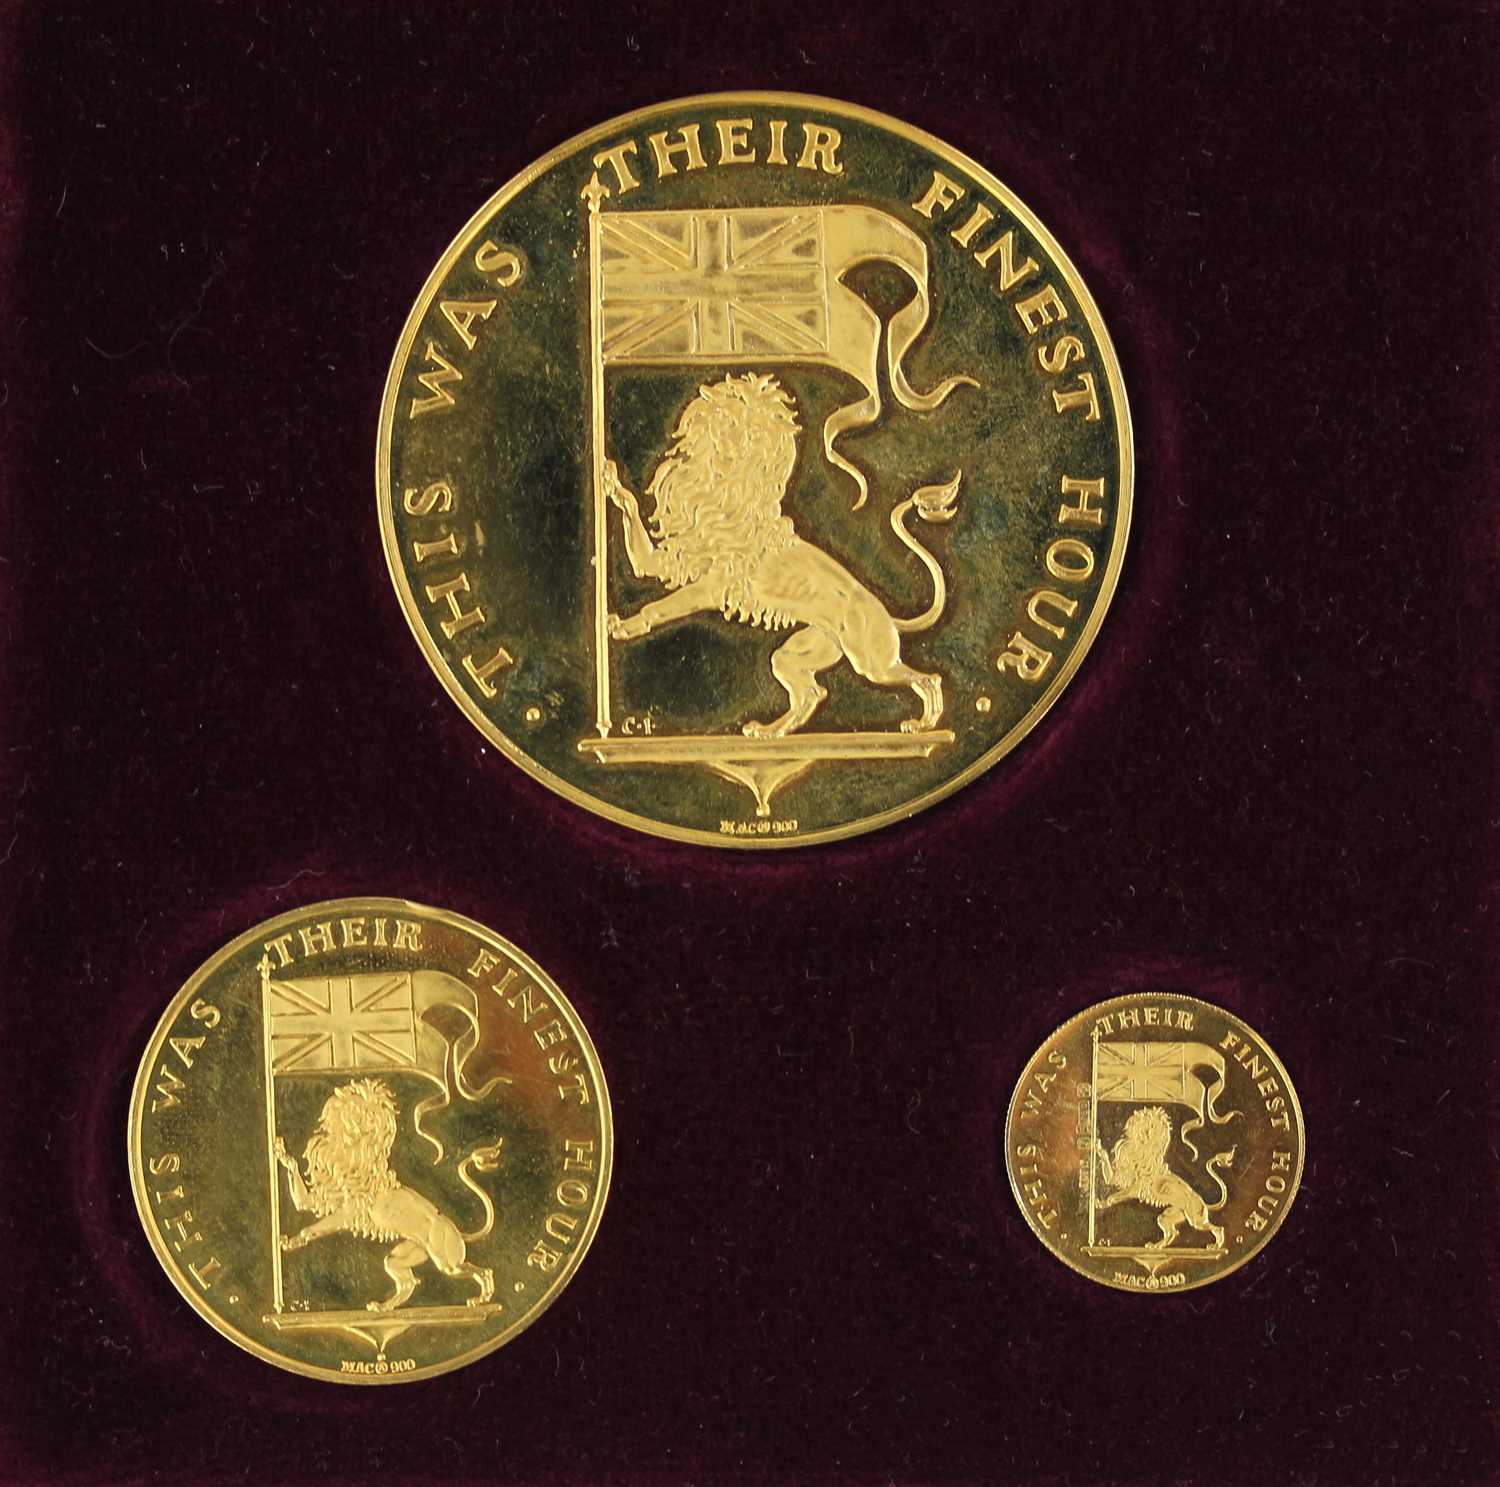 A Winston Churchill gold three medallion set 1964, each medallion .900 gold, depicting a portrait - Image 2 of 3